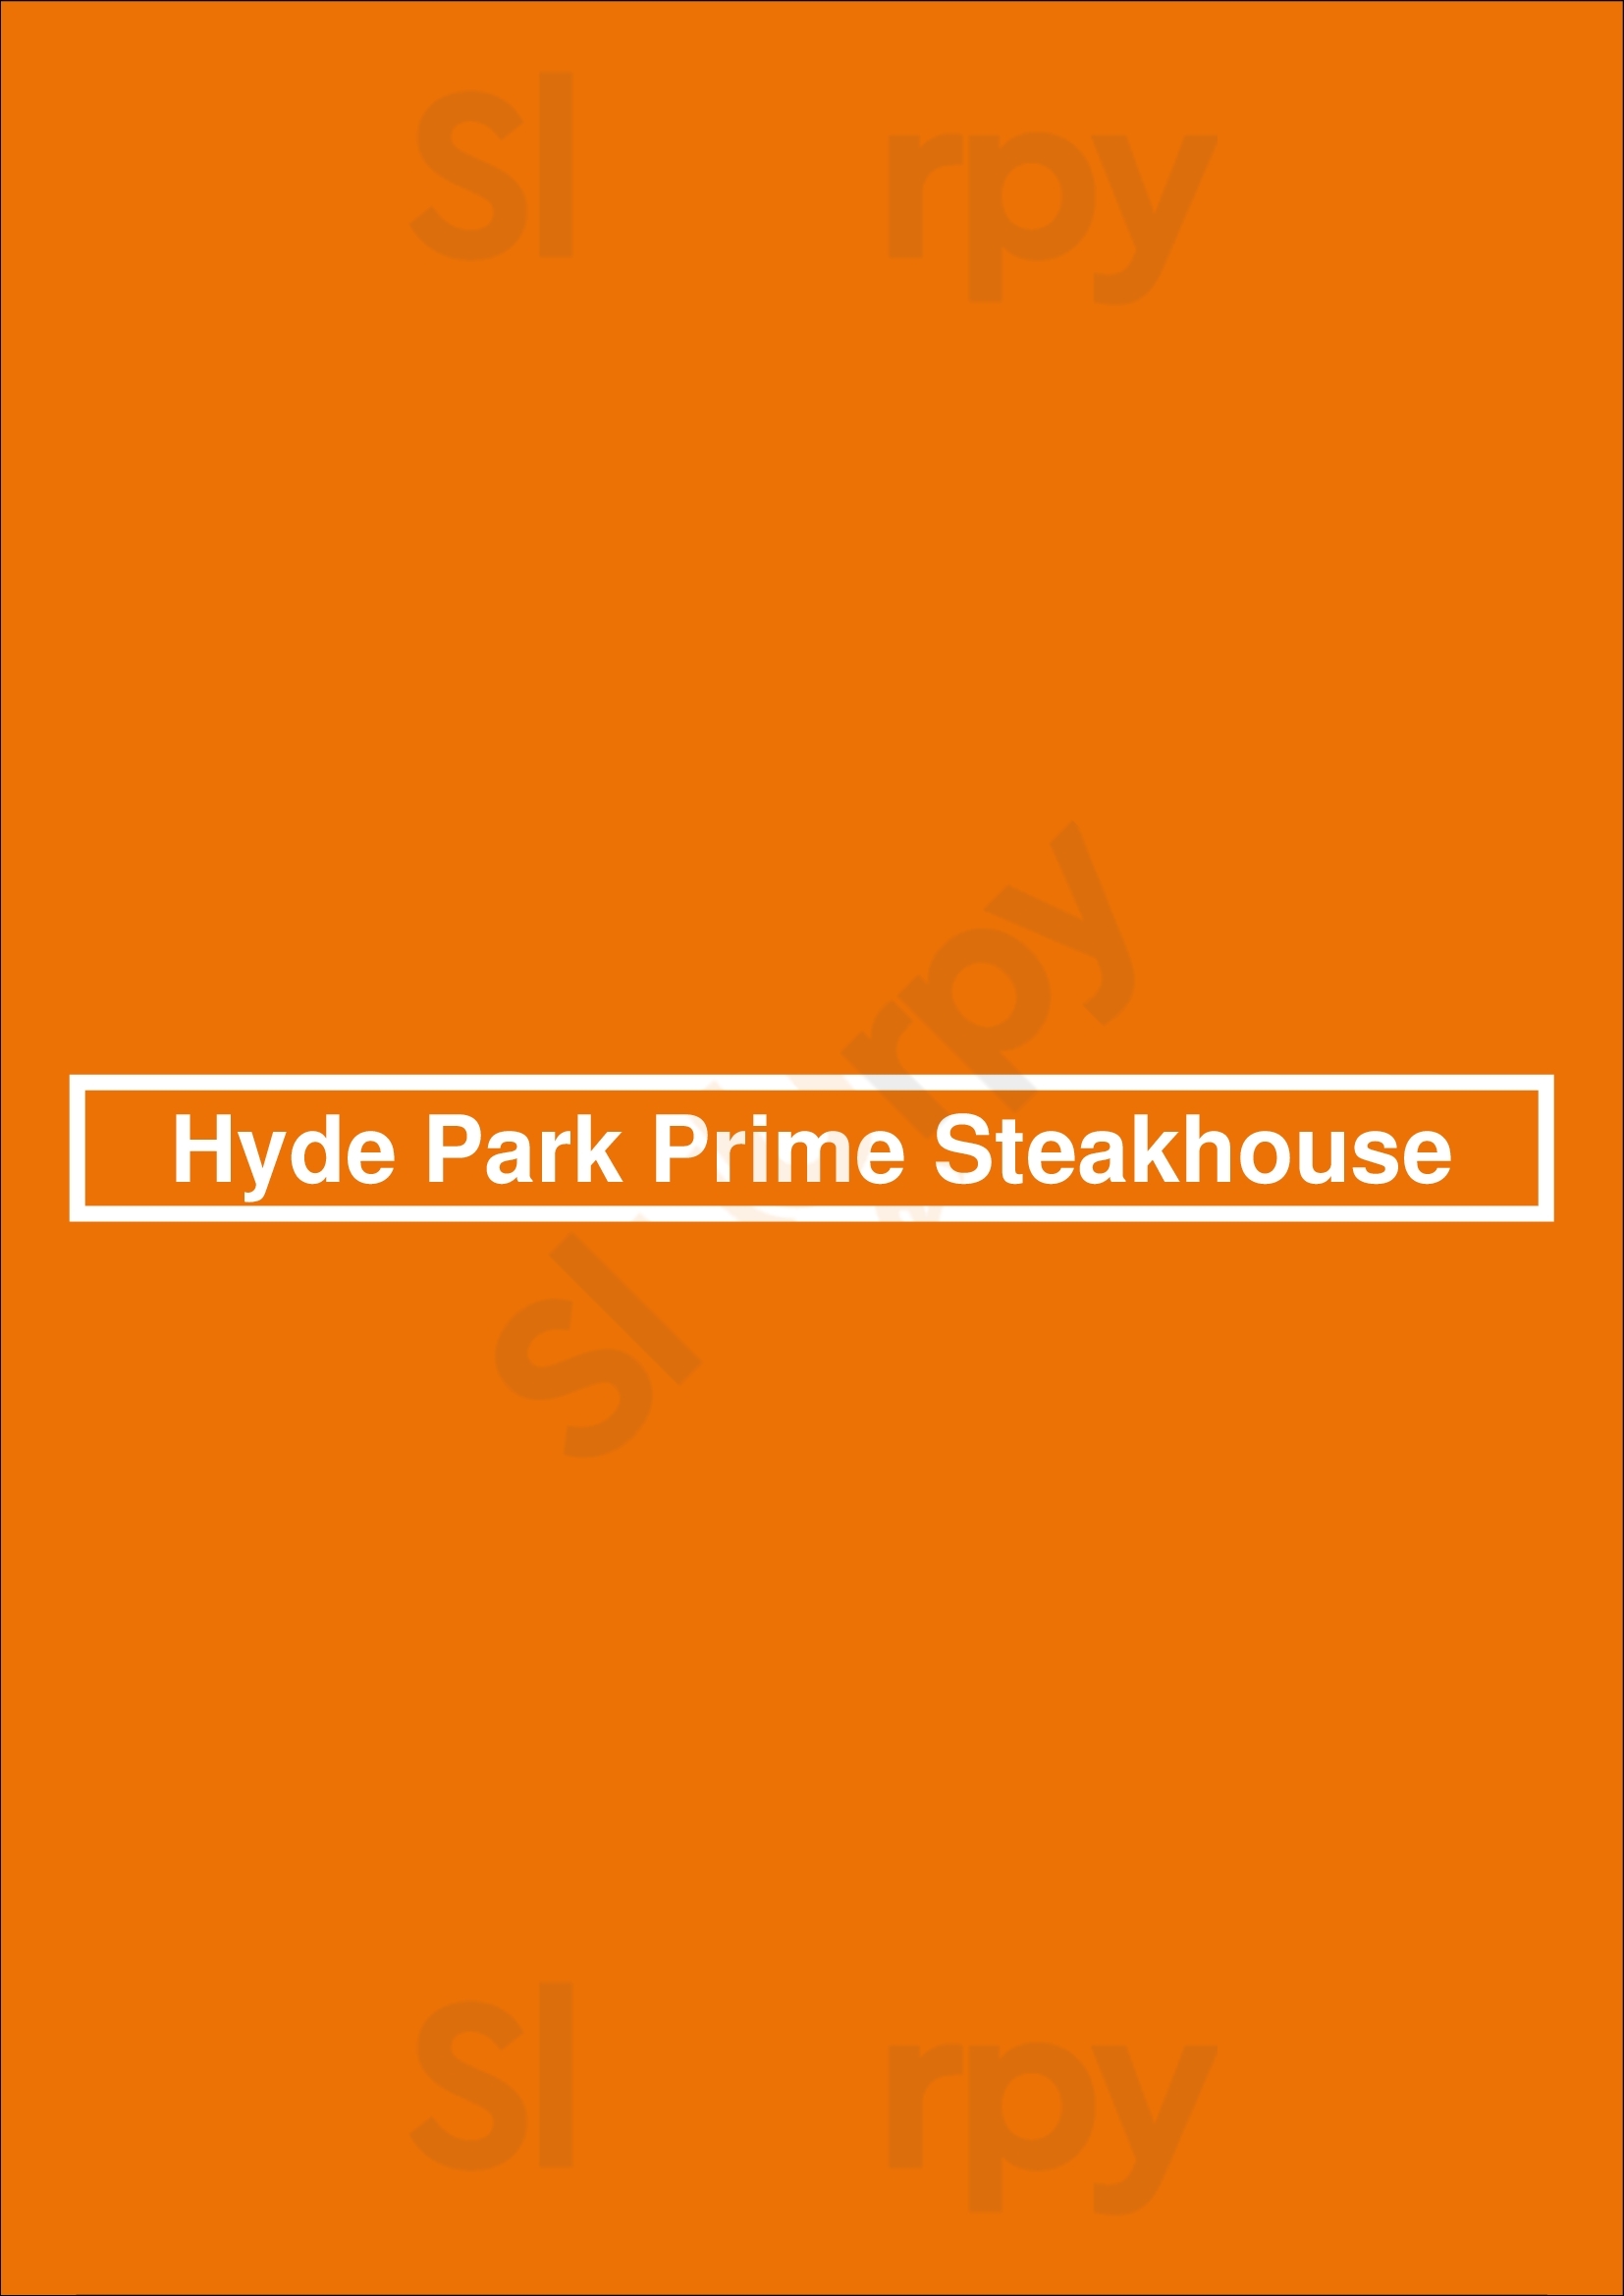 Hyde Park Prime Steakhouse Pittsburgh Menu - 1